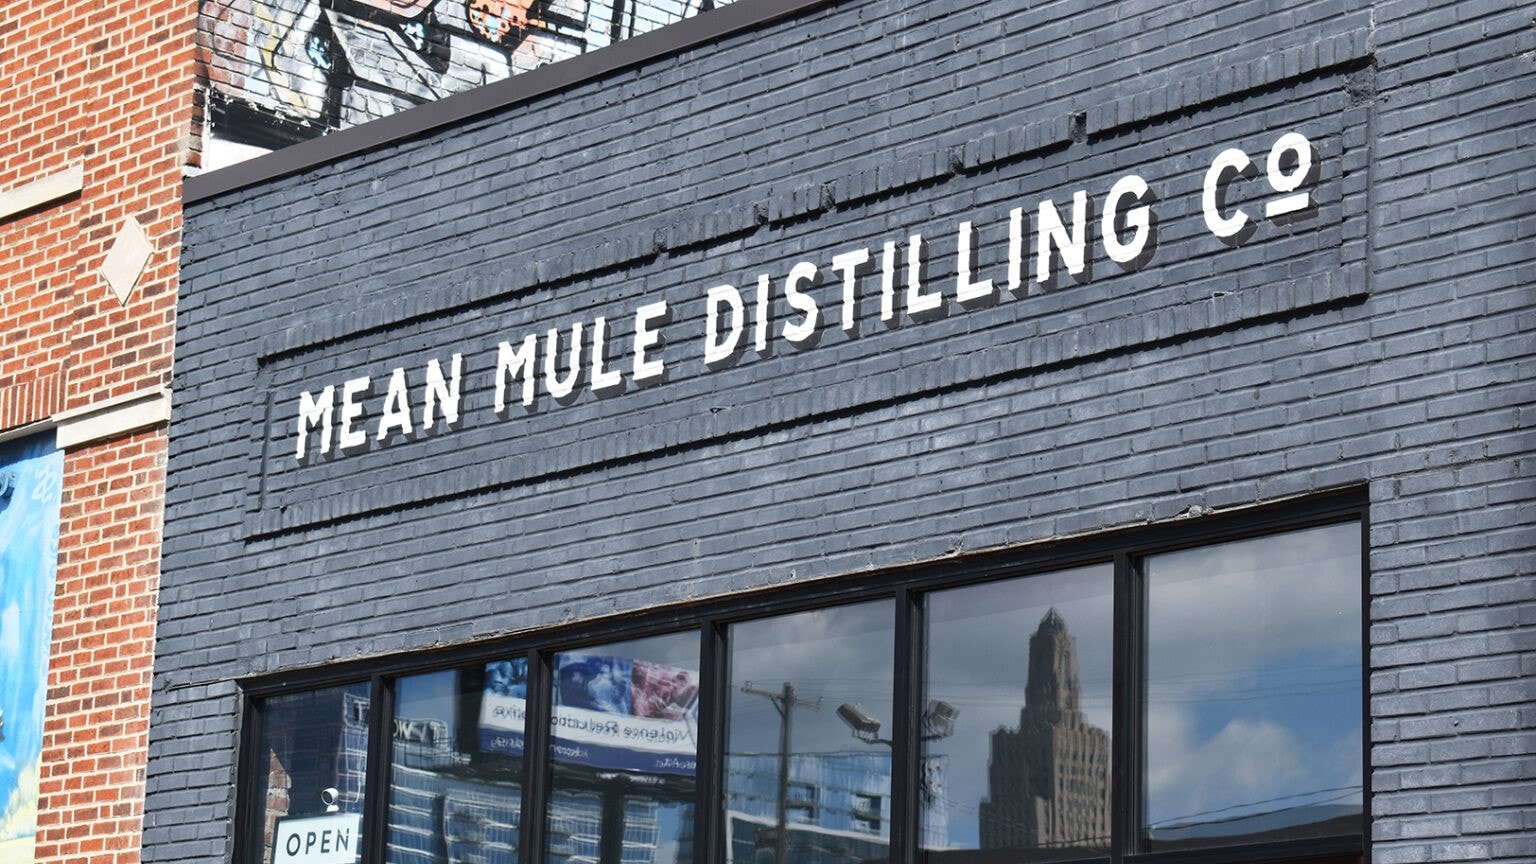 Mean Mule Distilling Co. sits in the Crossroads.